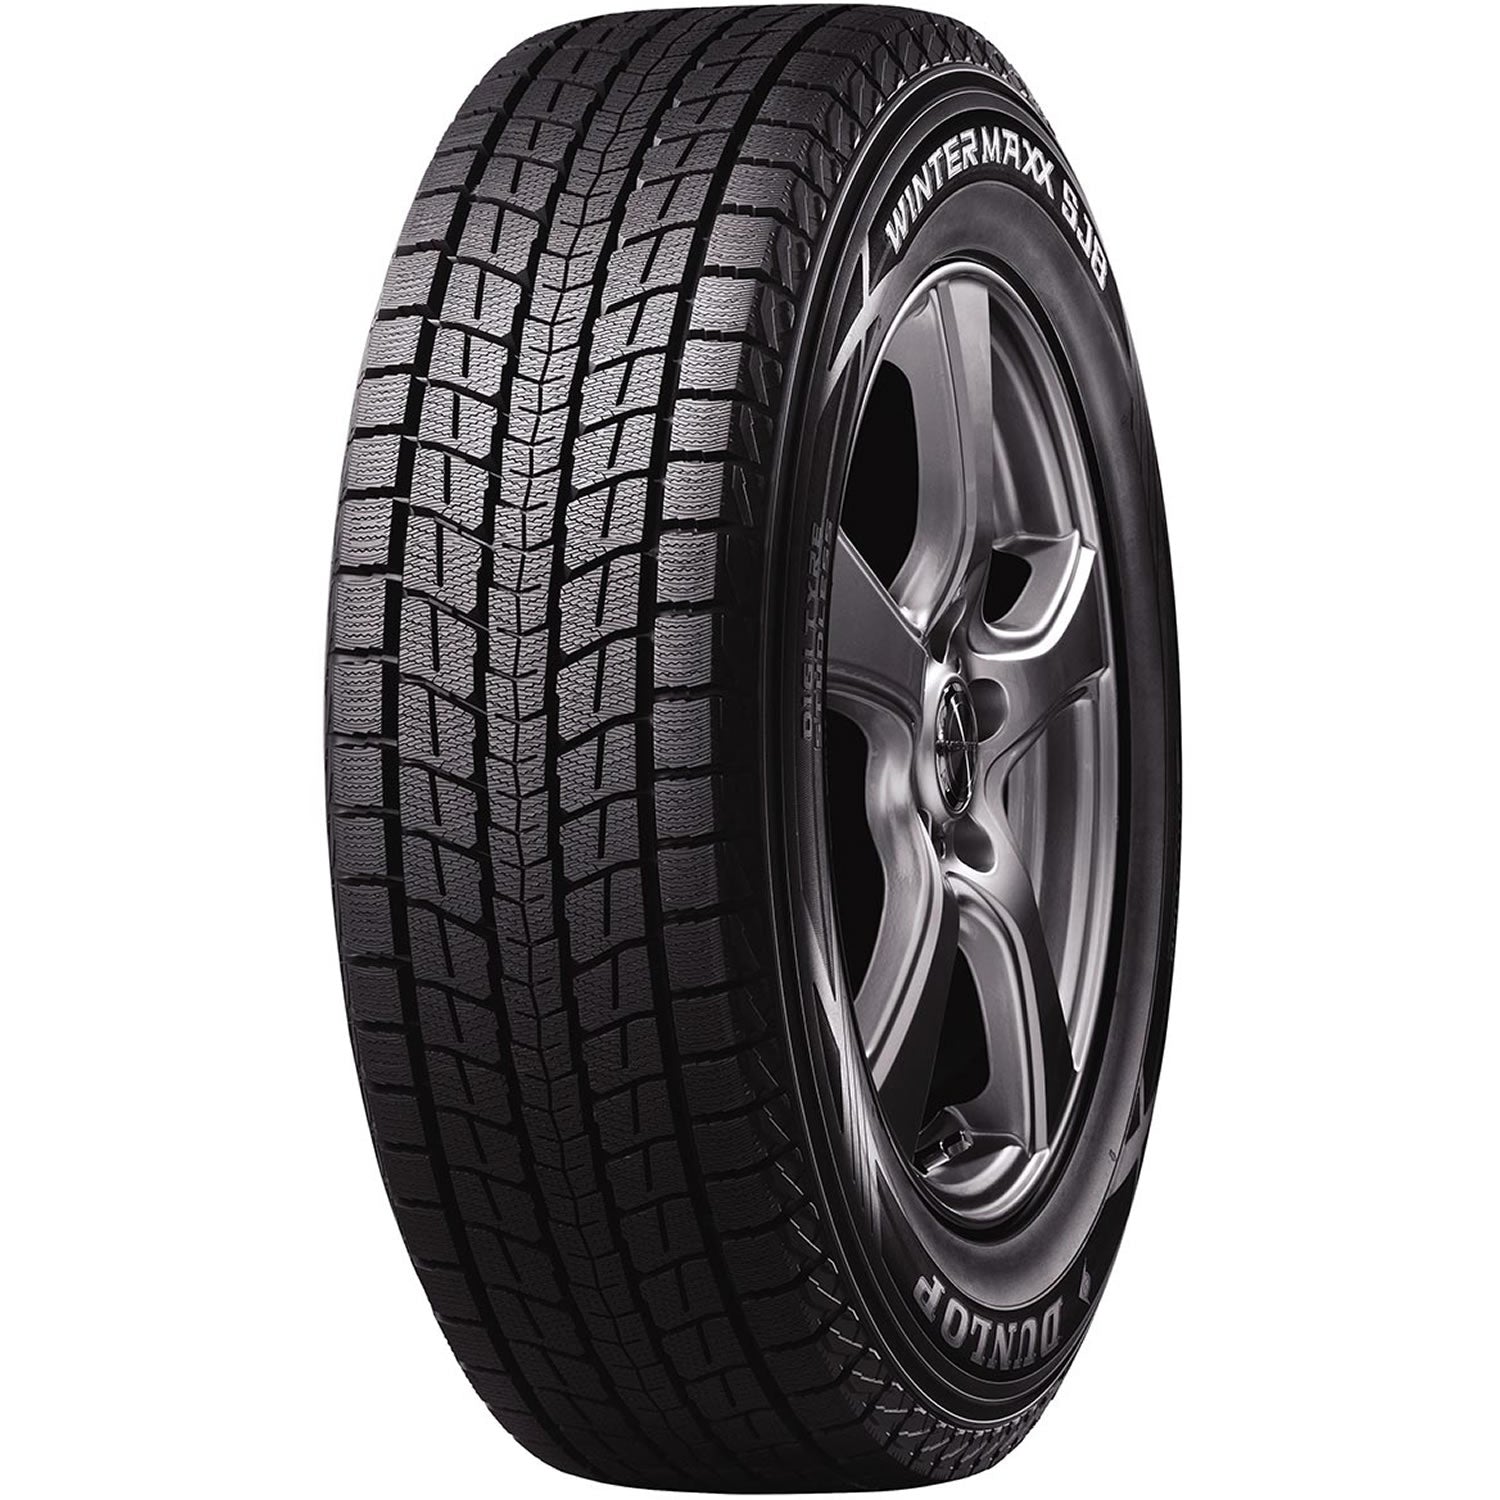 DUNLOP WINTER MAXX SJ8 235/55R17 (27.2X9.3R 17) Tires